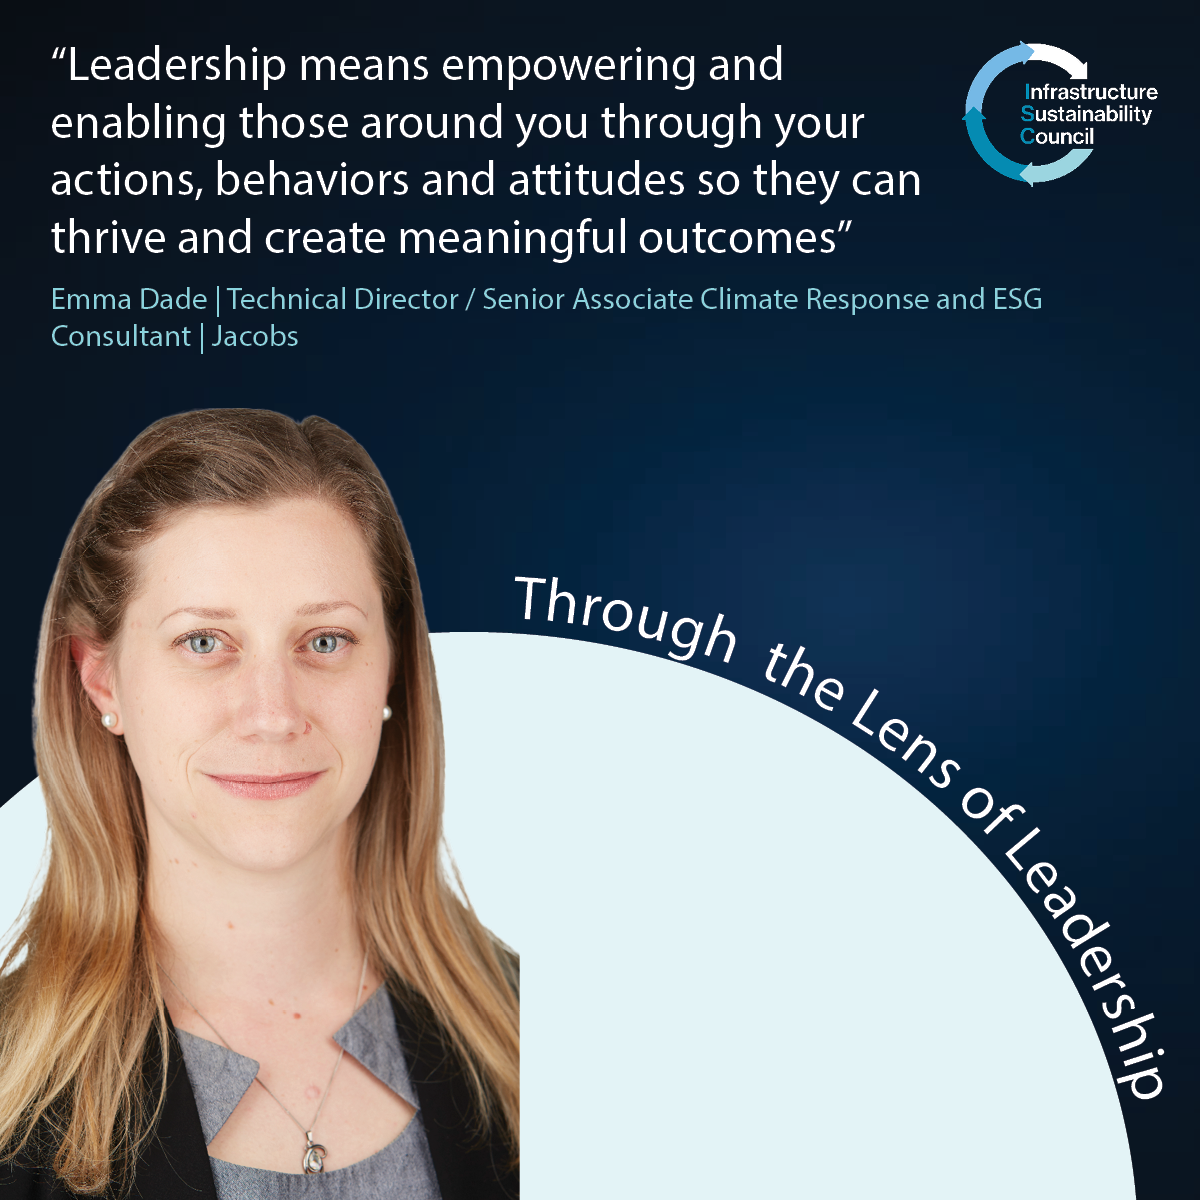 Through the lens of Leadership – Emma Dade, Jacobs